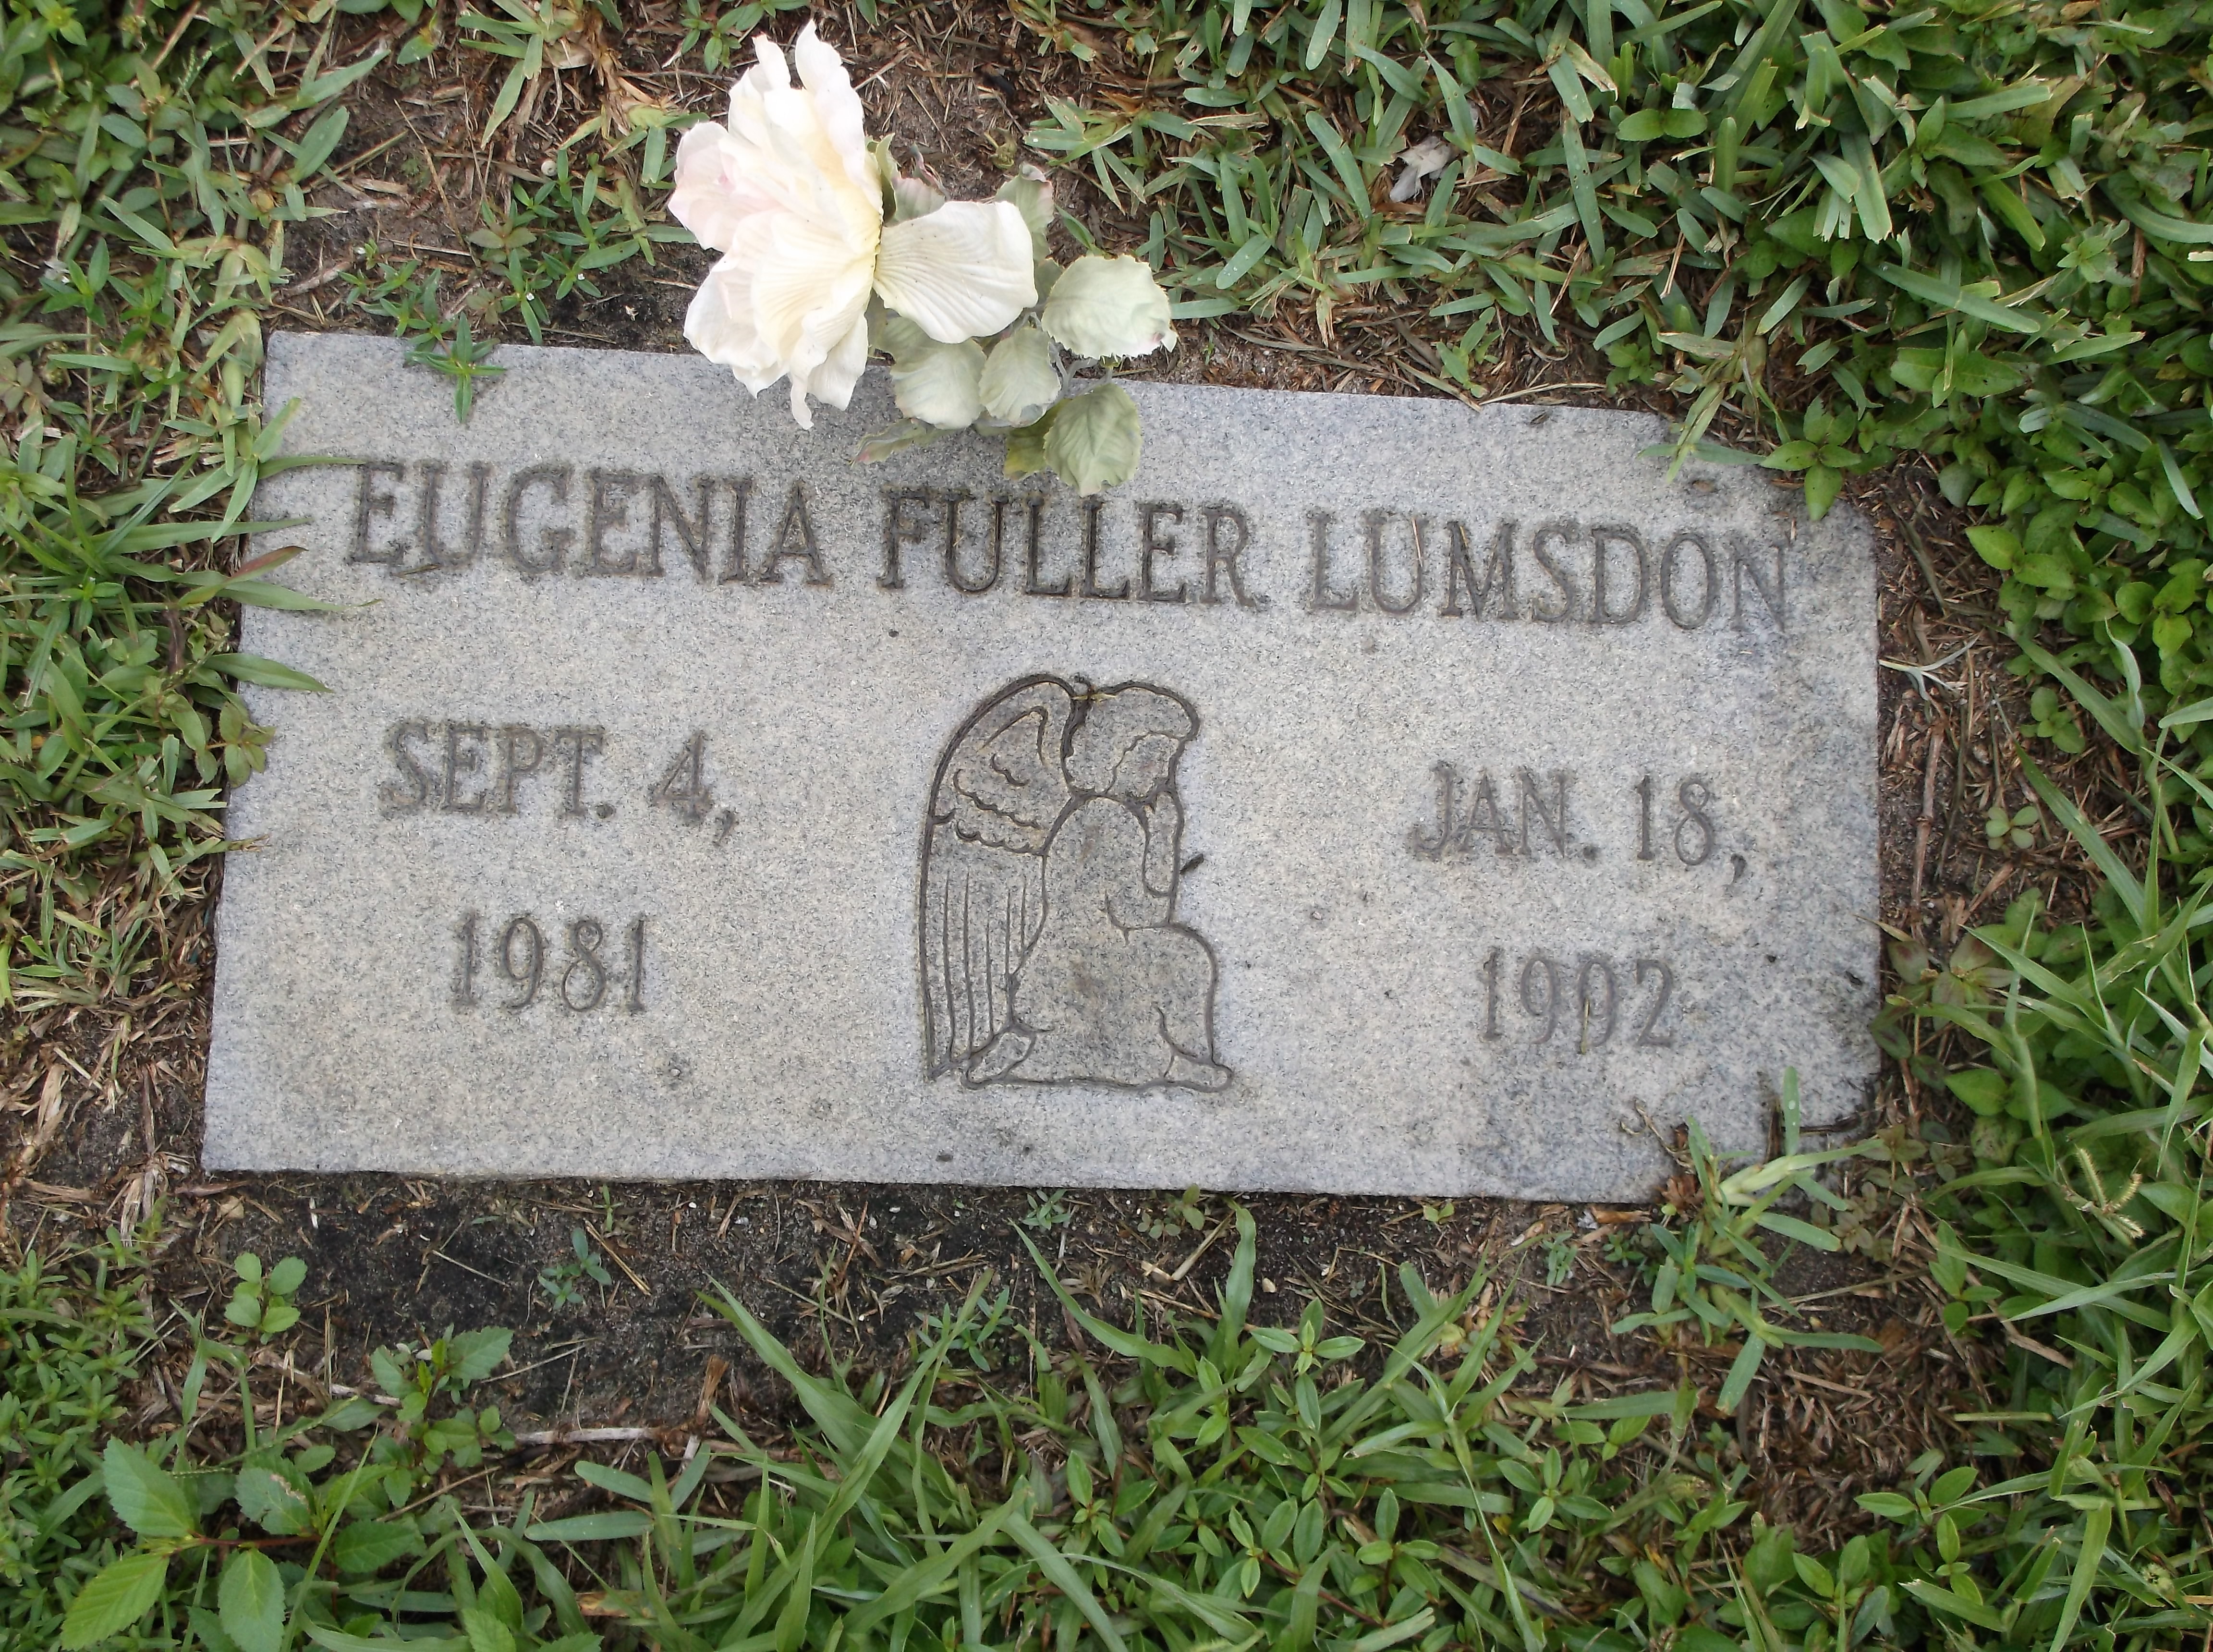 Eugenia Fuller Lumsdon